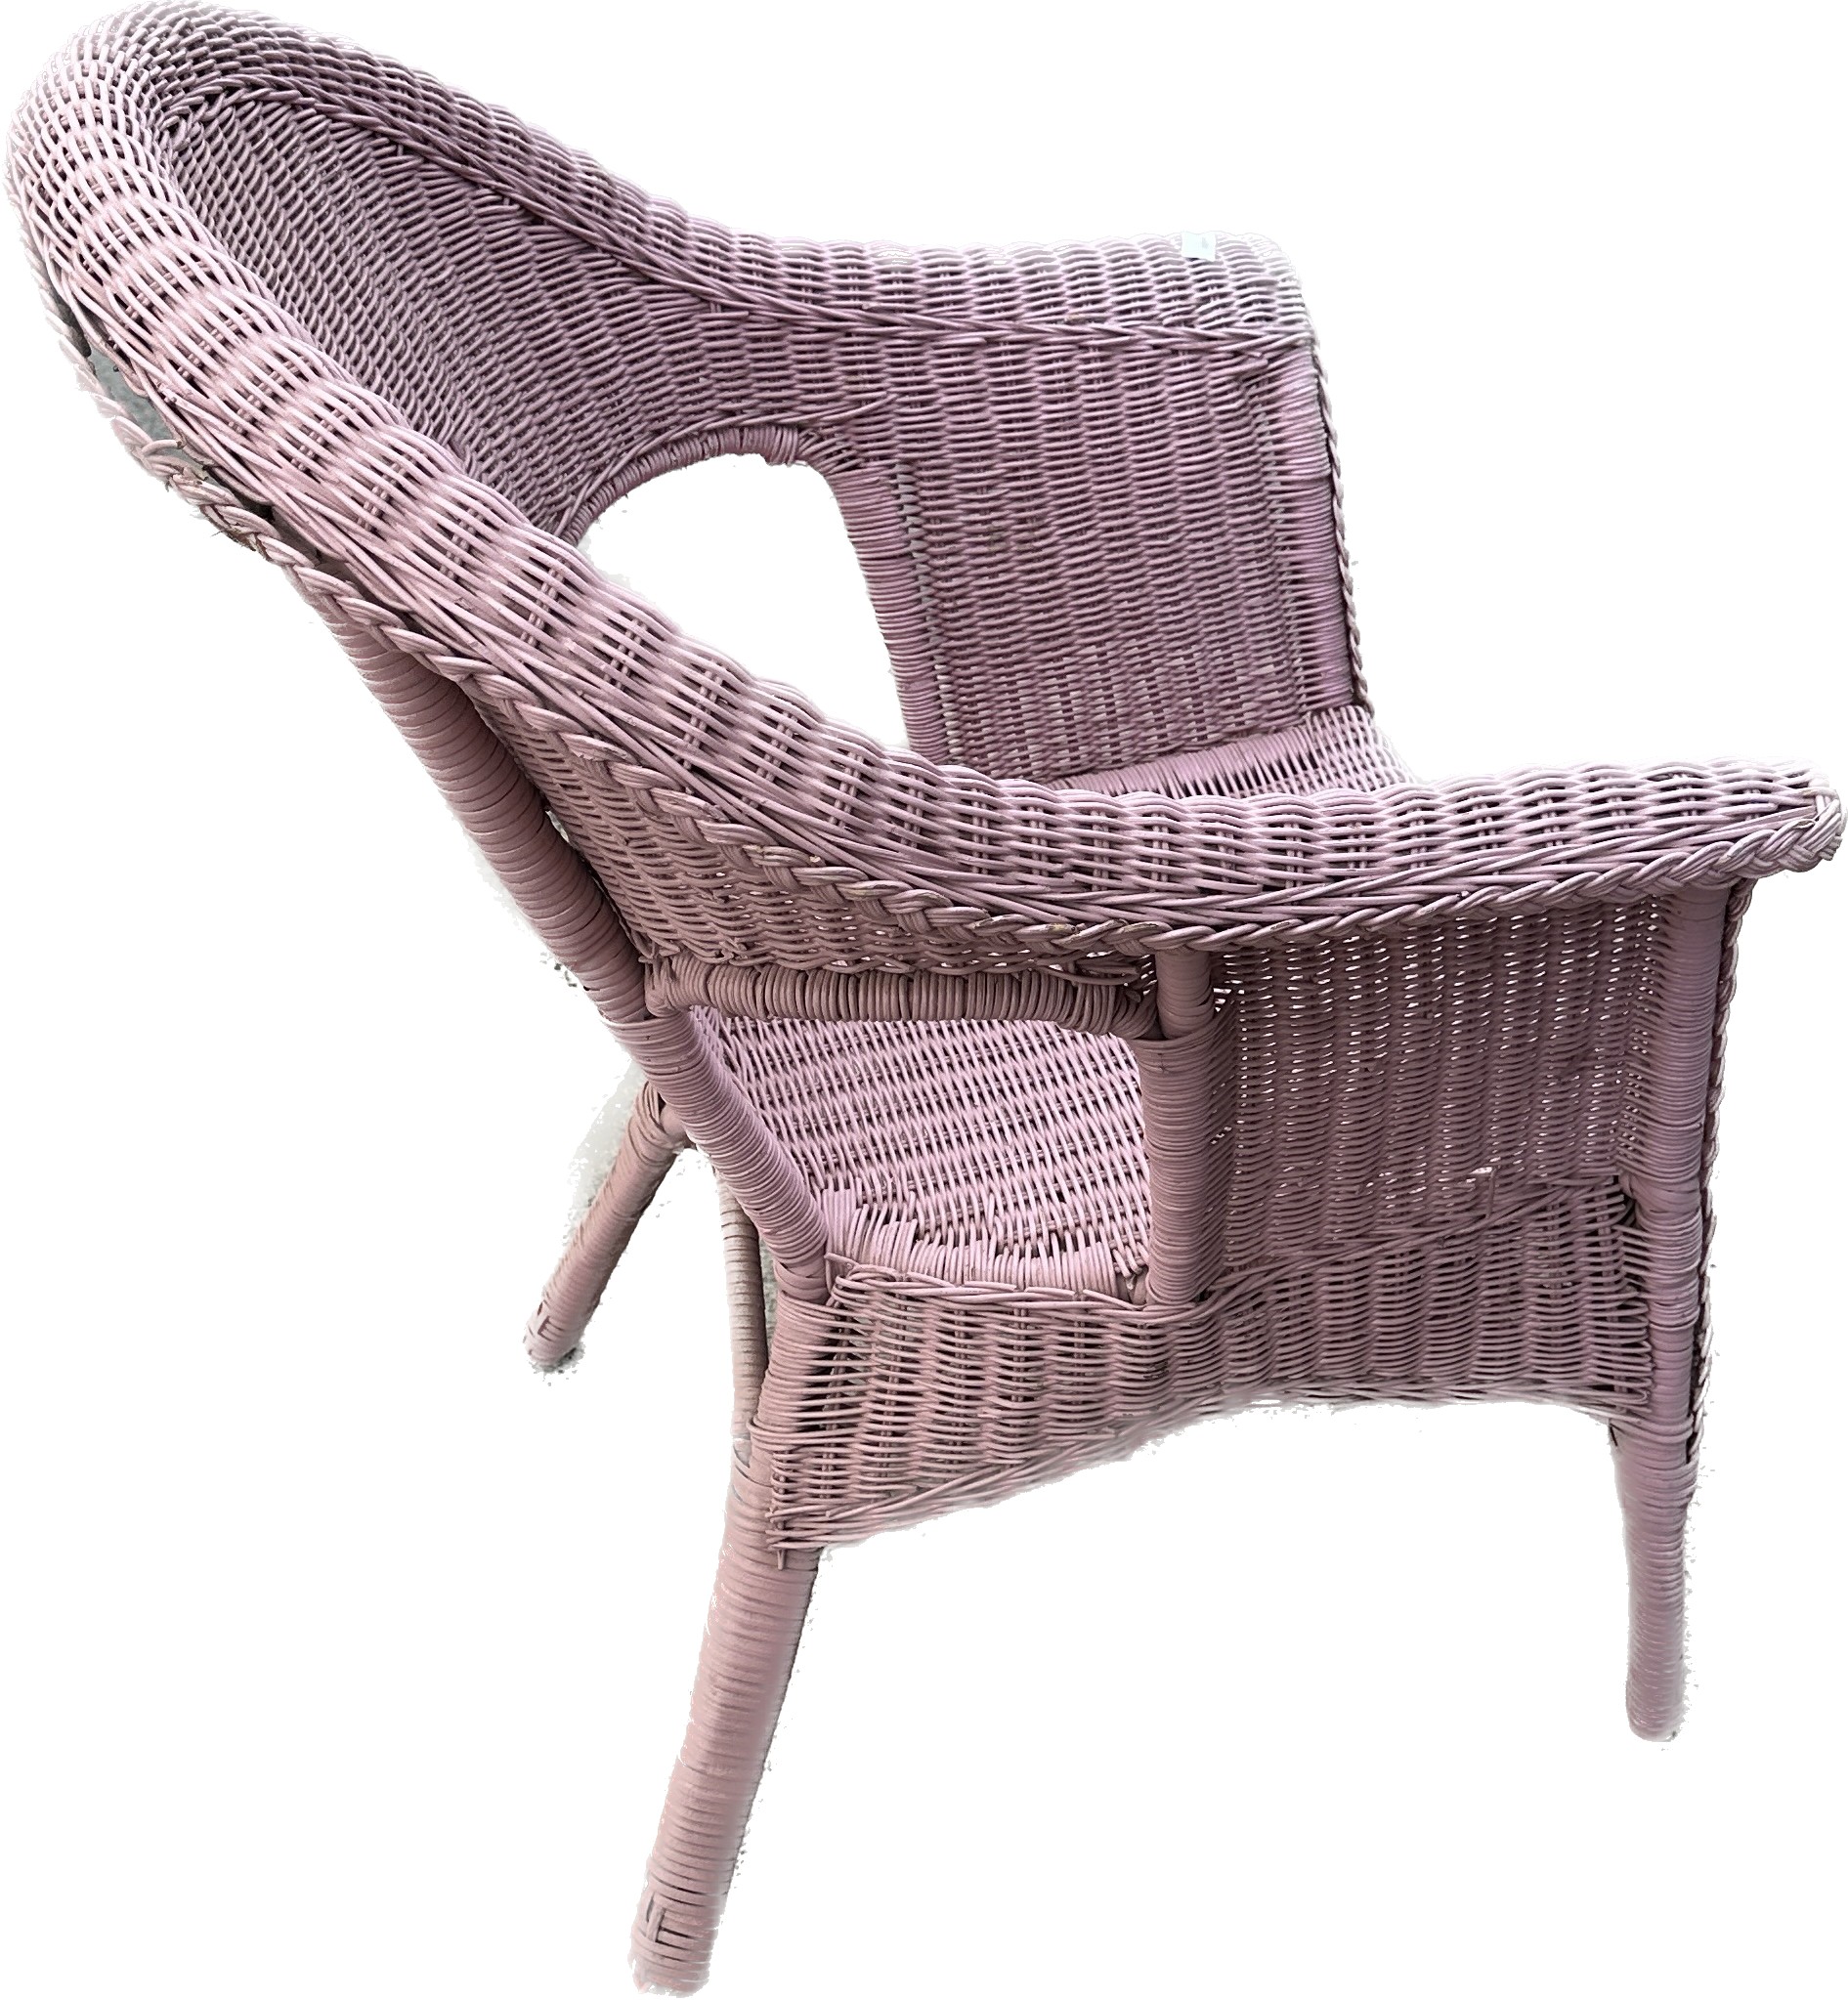 Wicker pink painted bedroom chair - Image 3 of 3